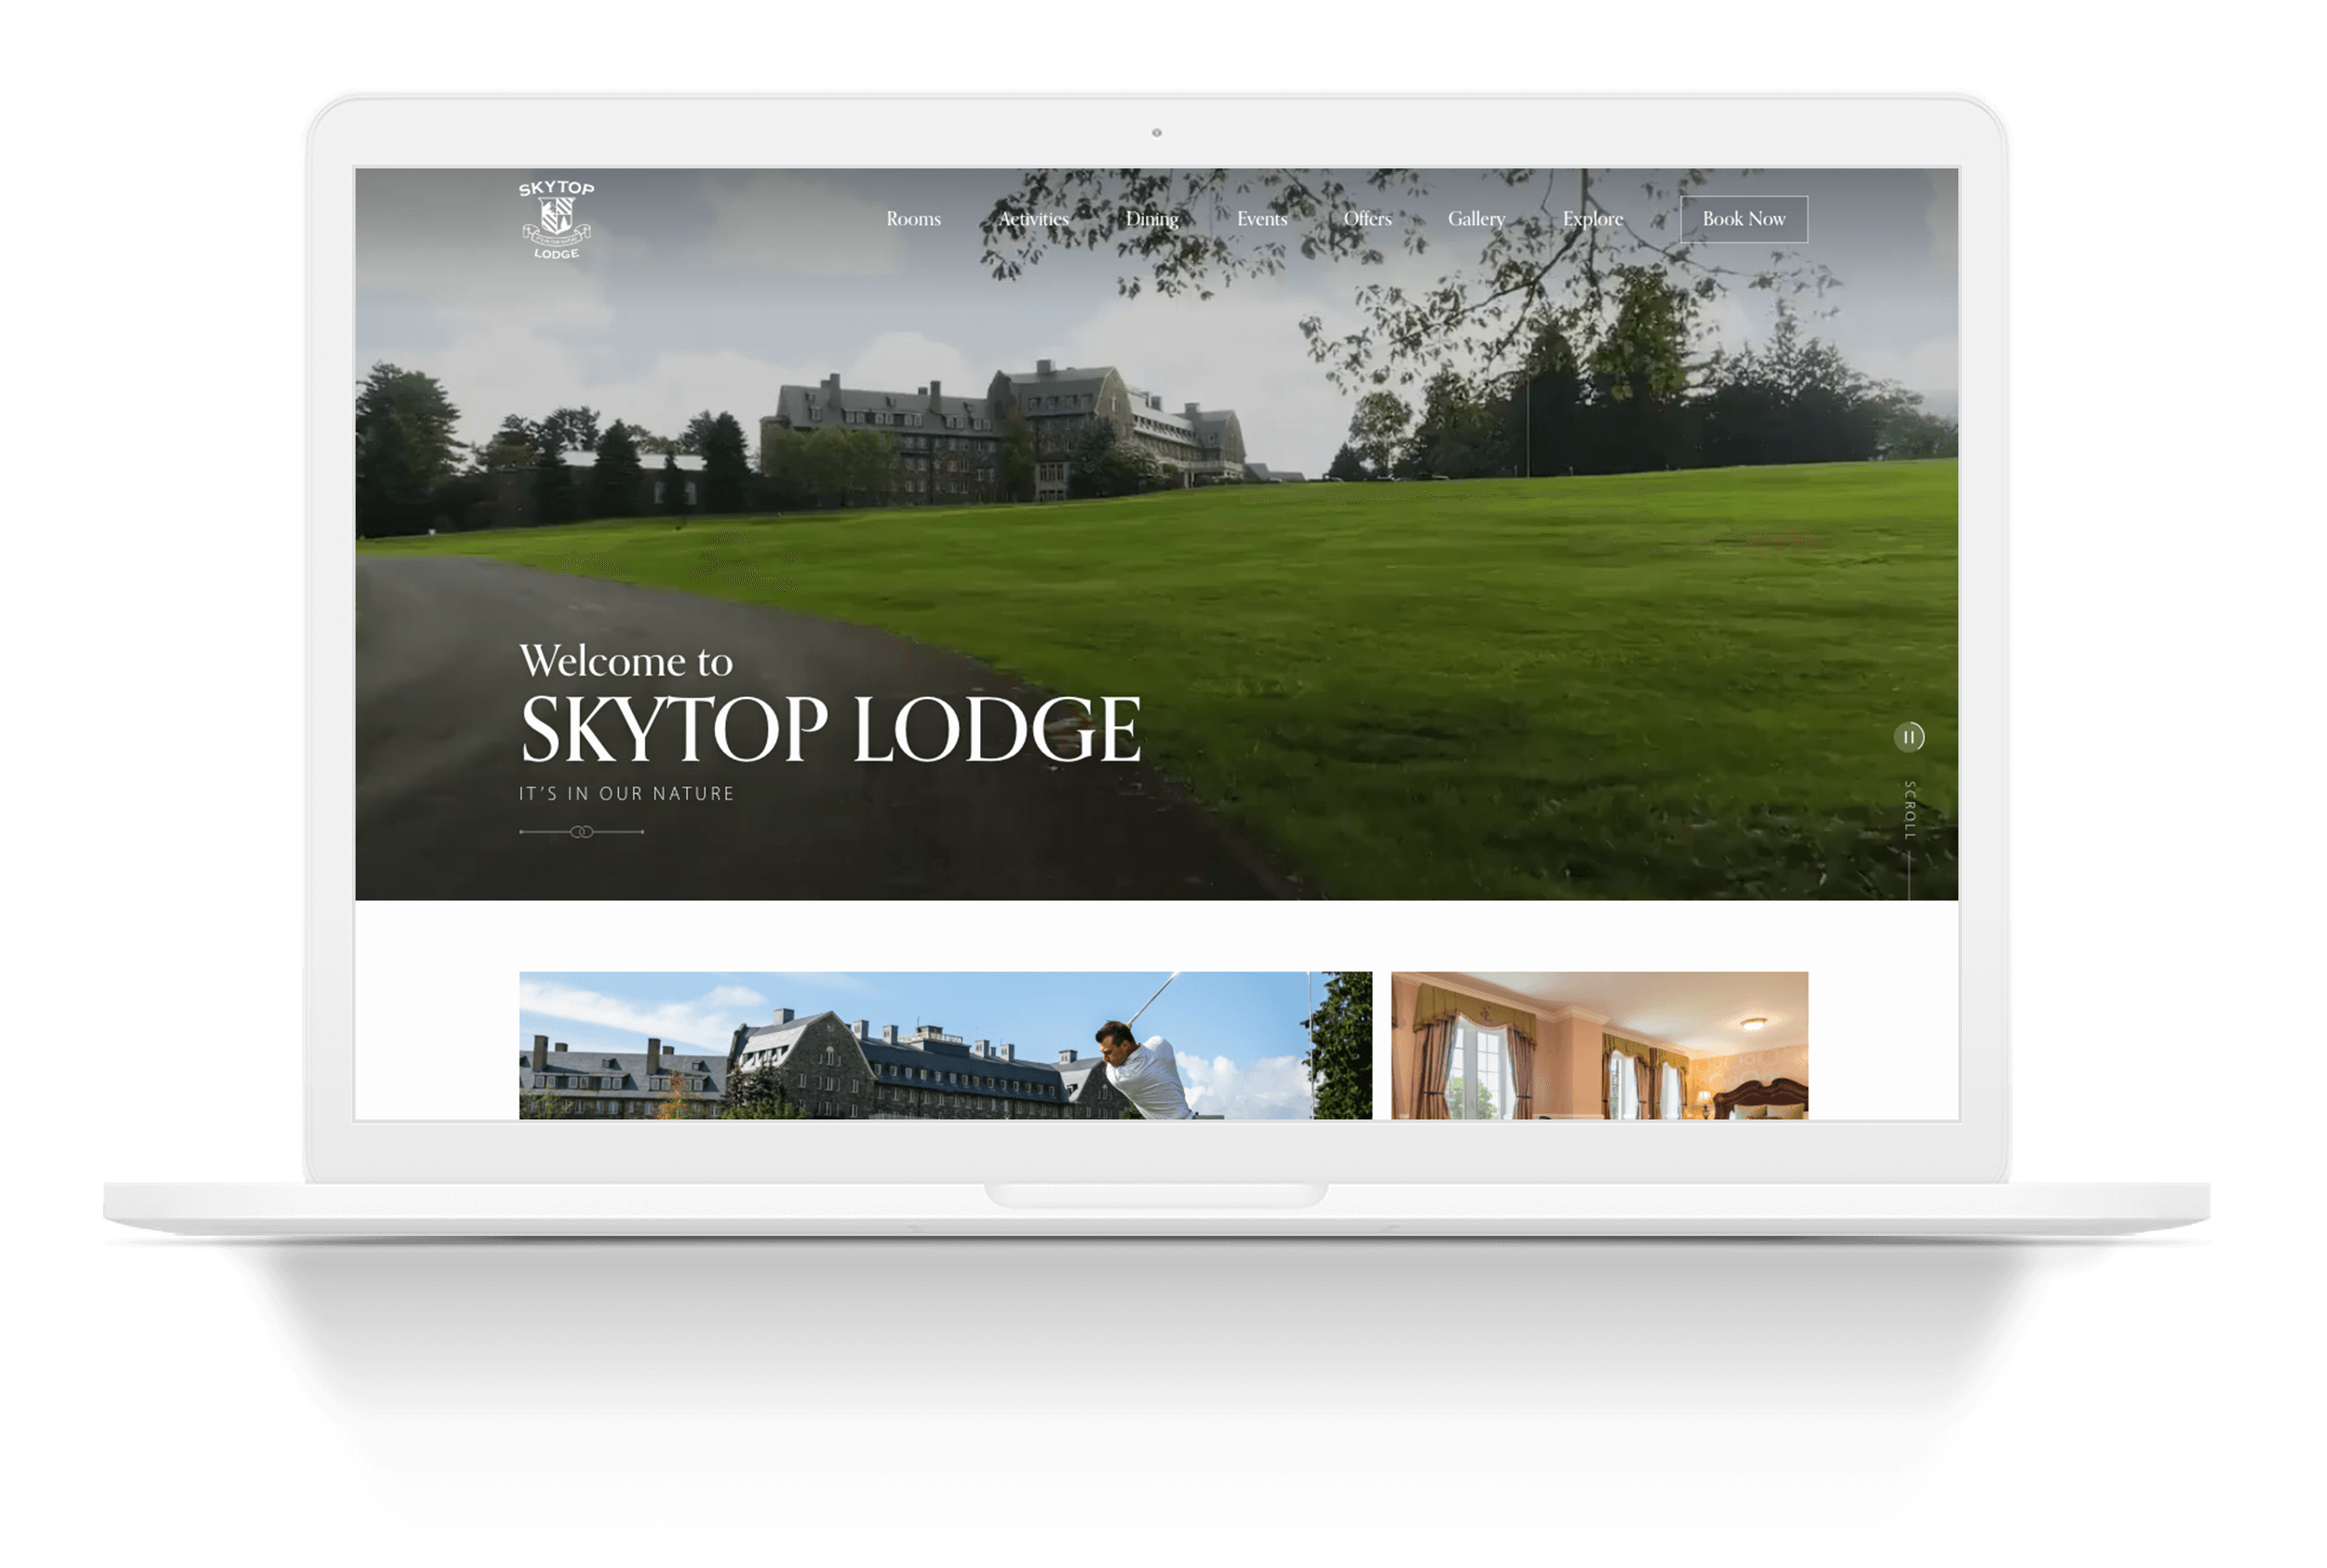 Skytop Lodge website on a laptop